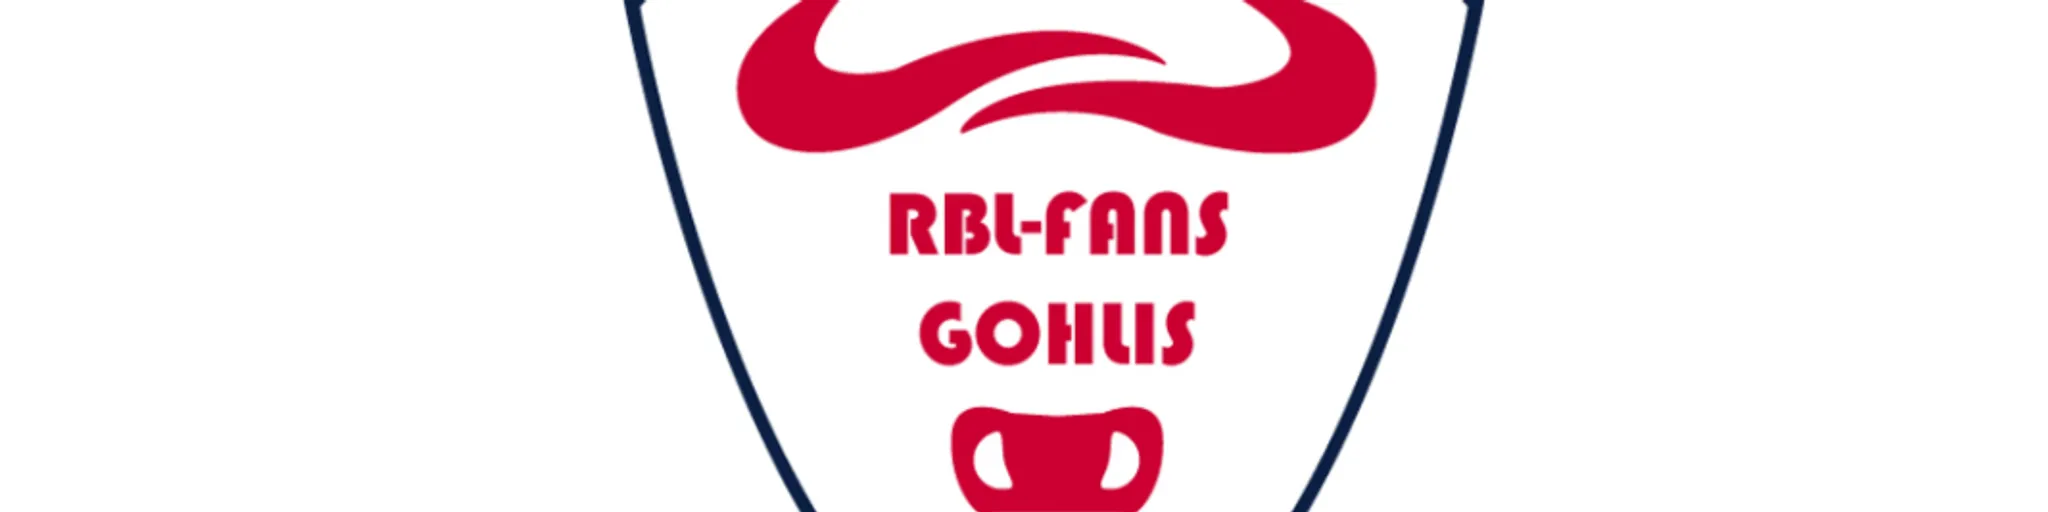 RBL-Fans Gohlis, OFC seit 03. Mai 2014